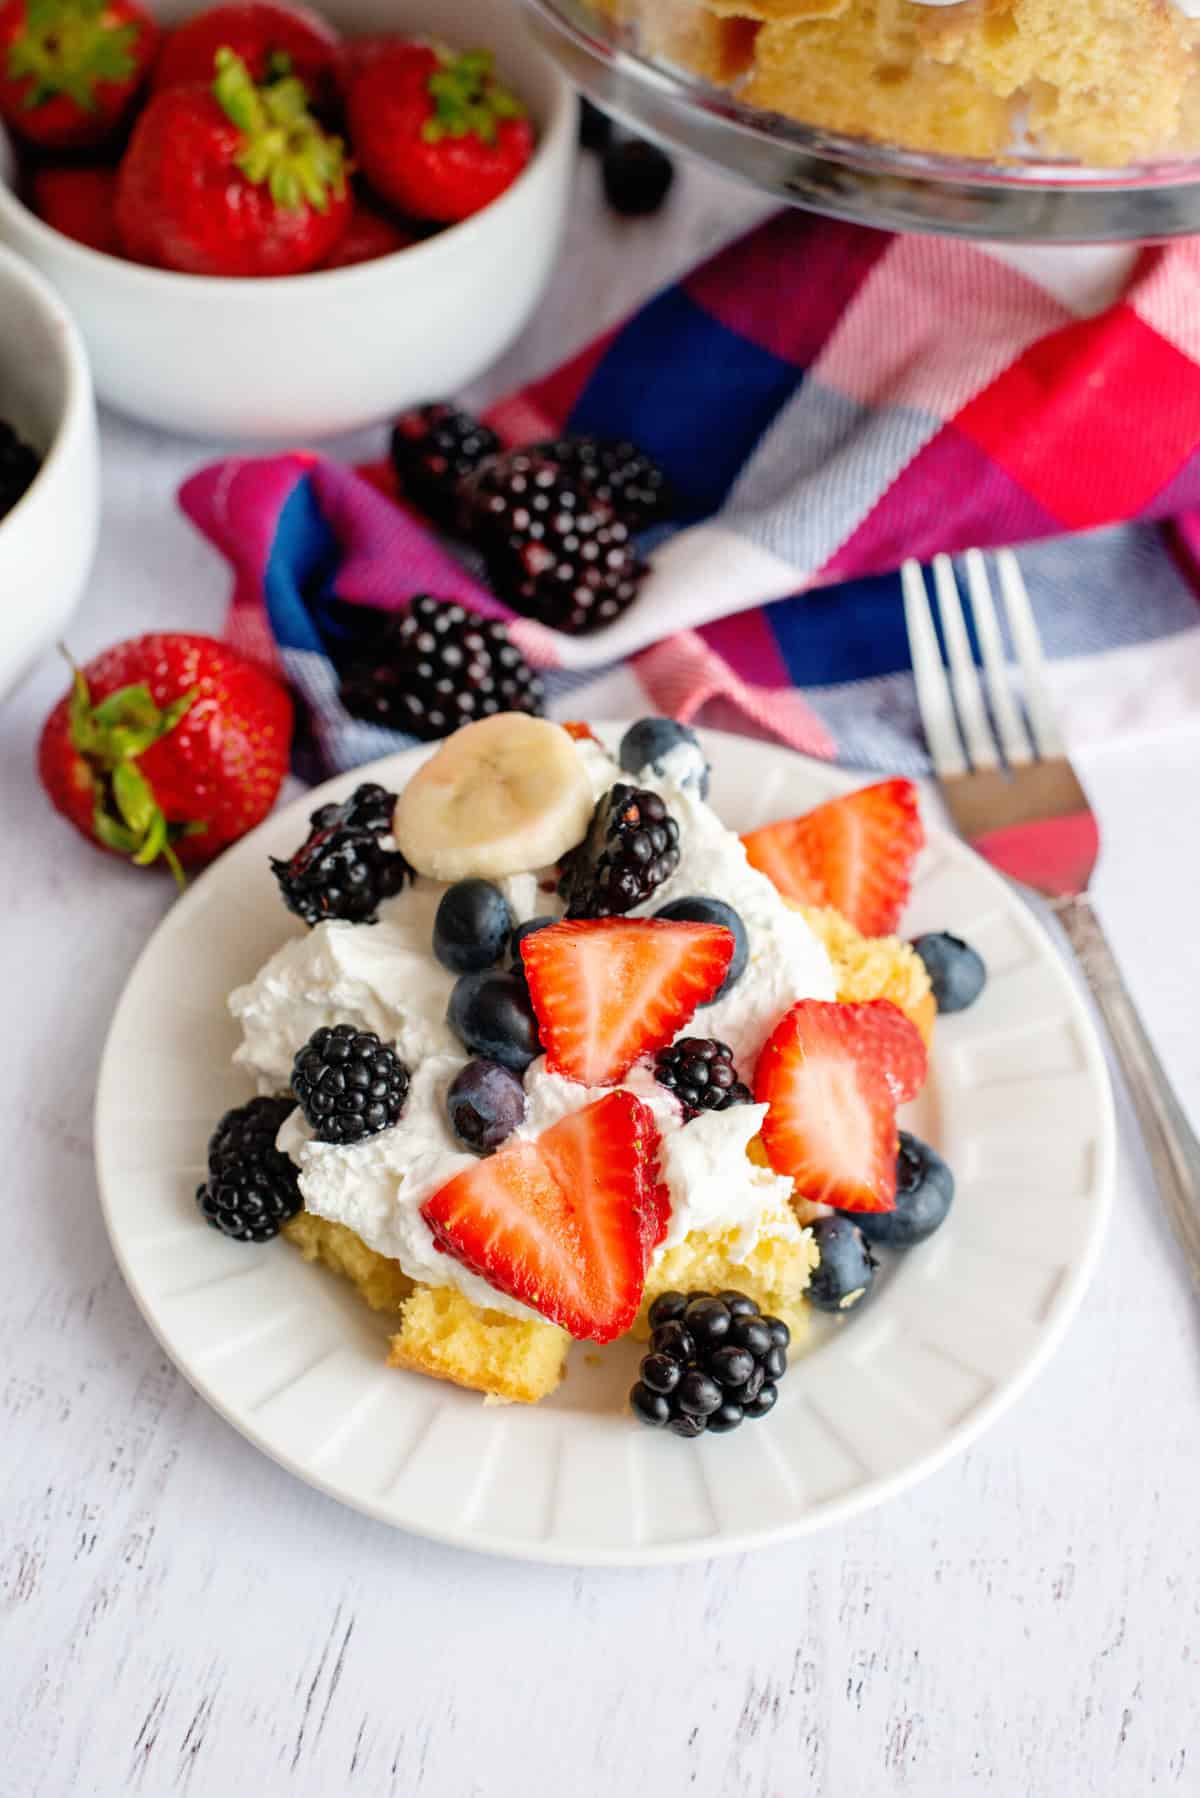 serve creamy dreamy fruit trifle